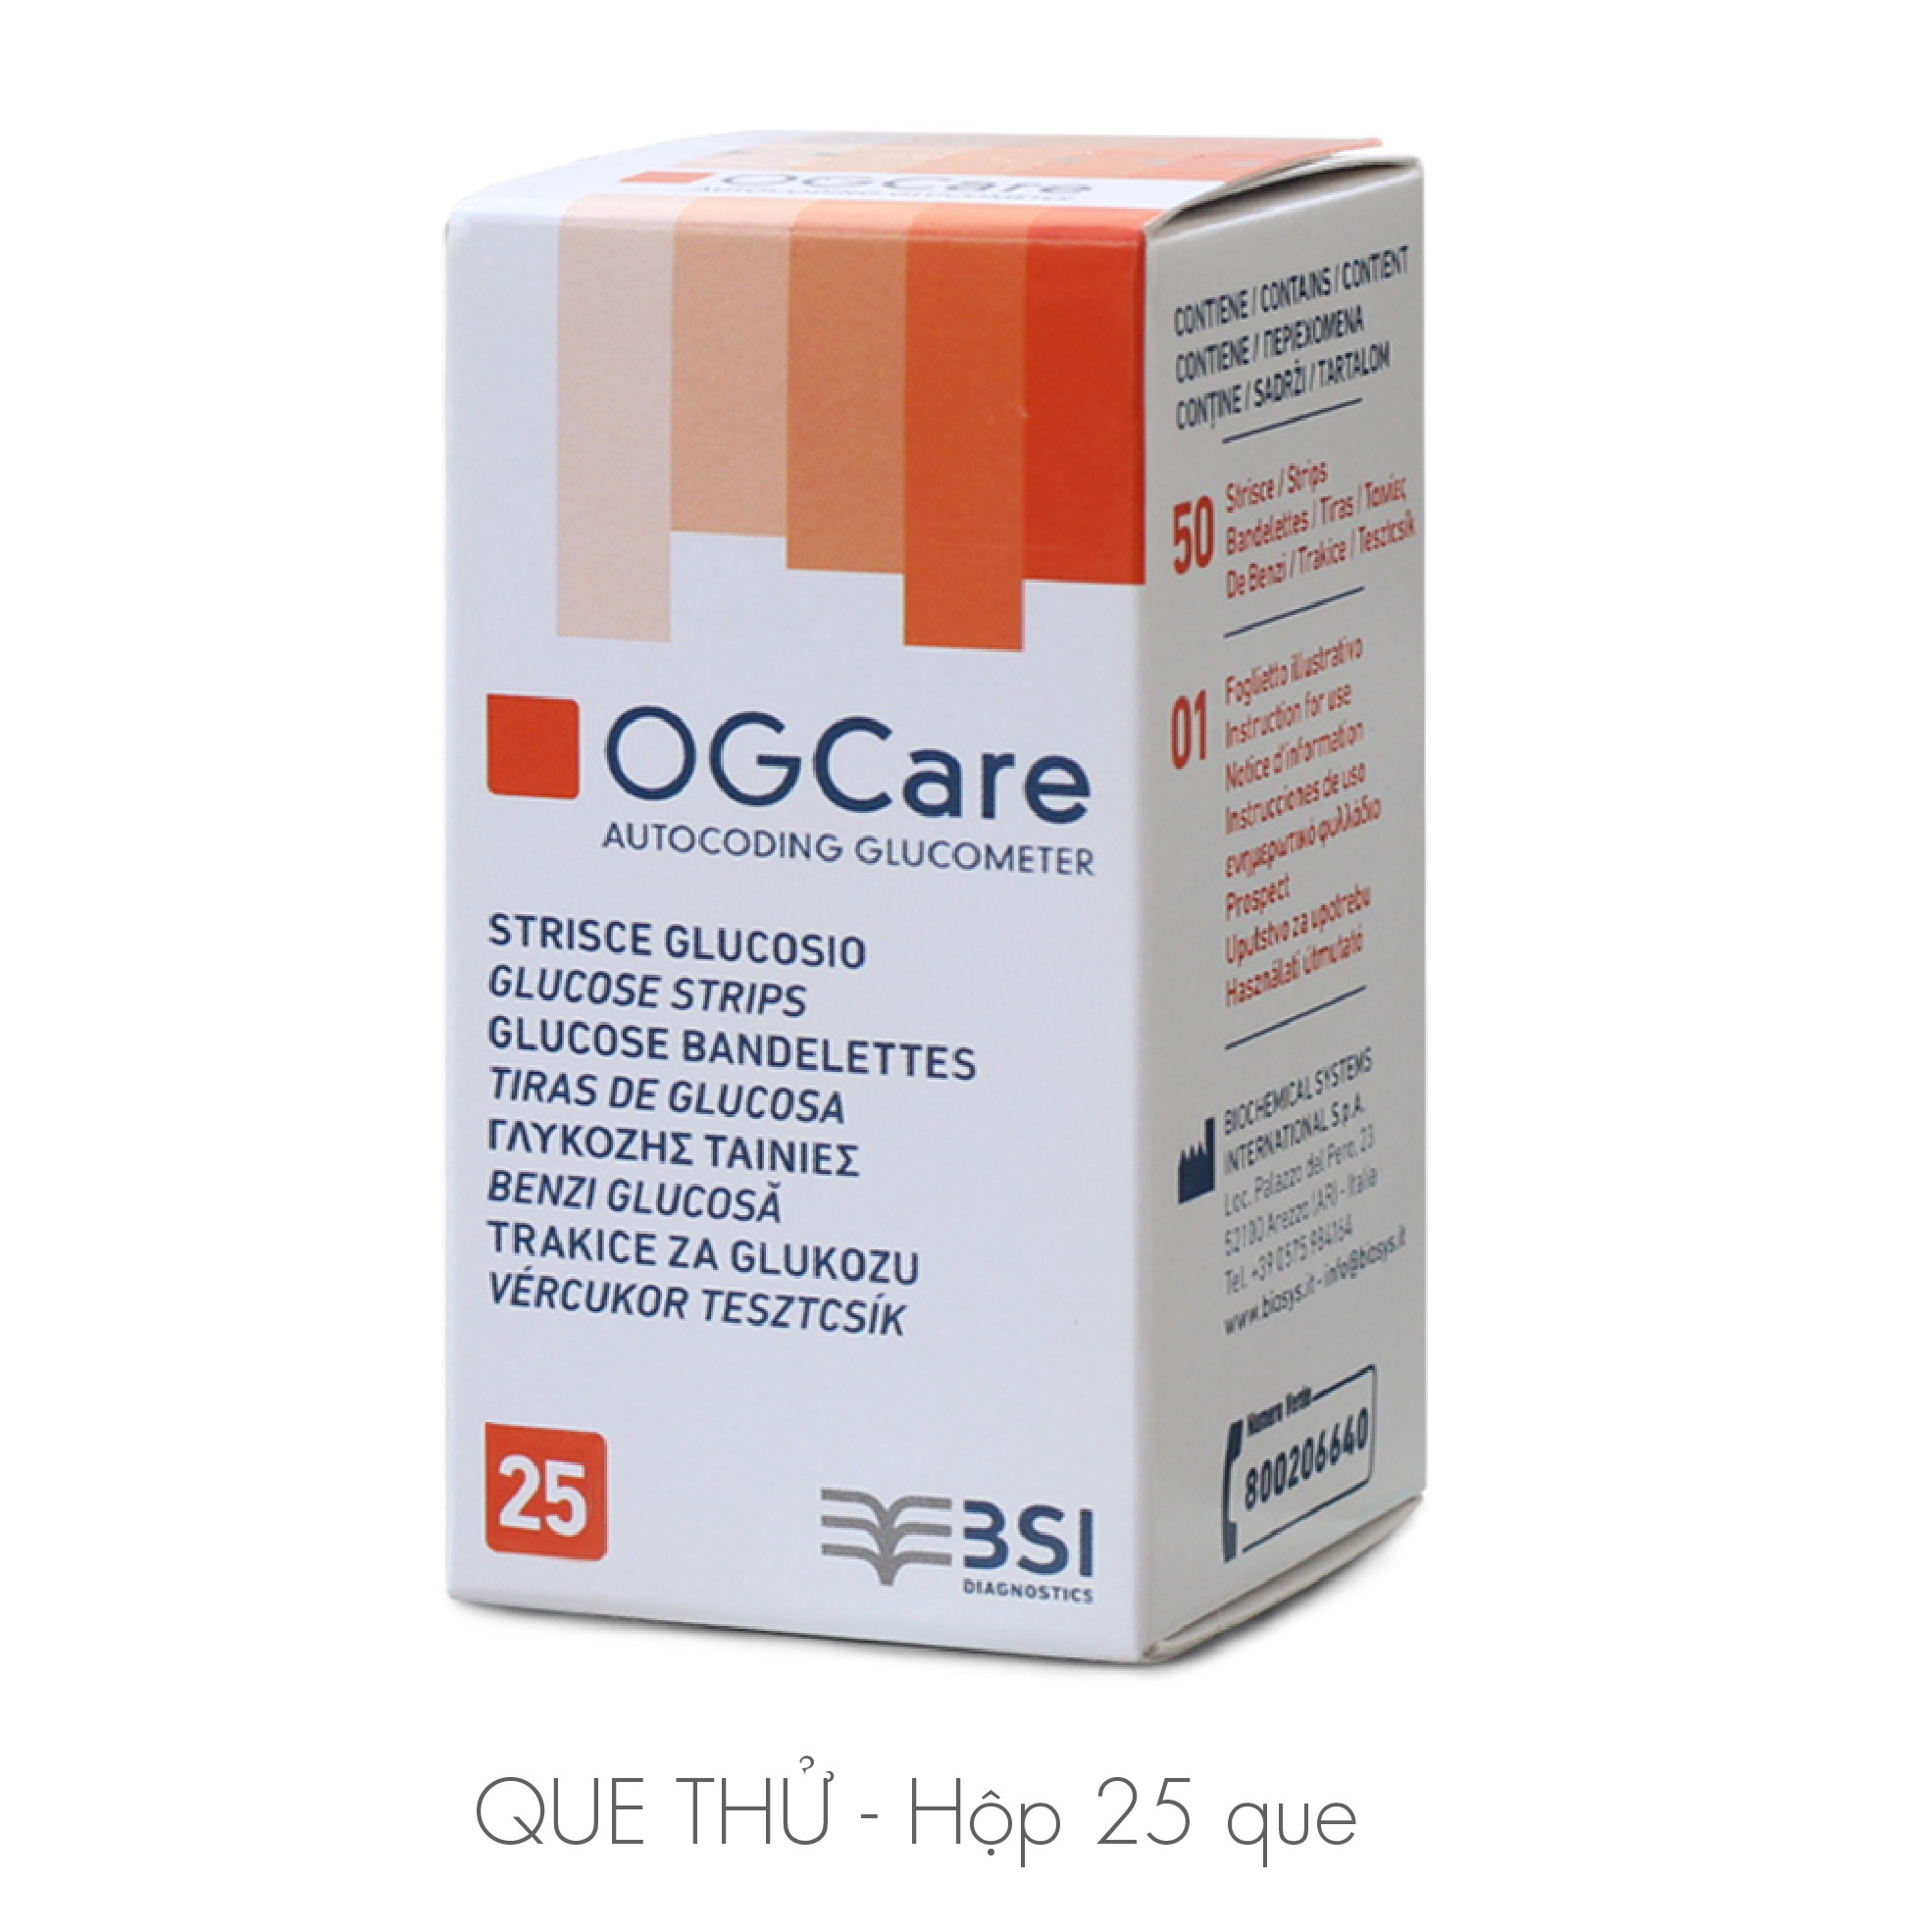 Dung cụ que thử đường huyết OGCARE (1 hộp 25 que)